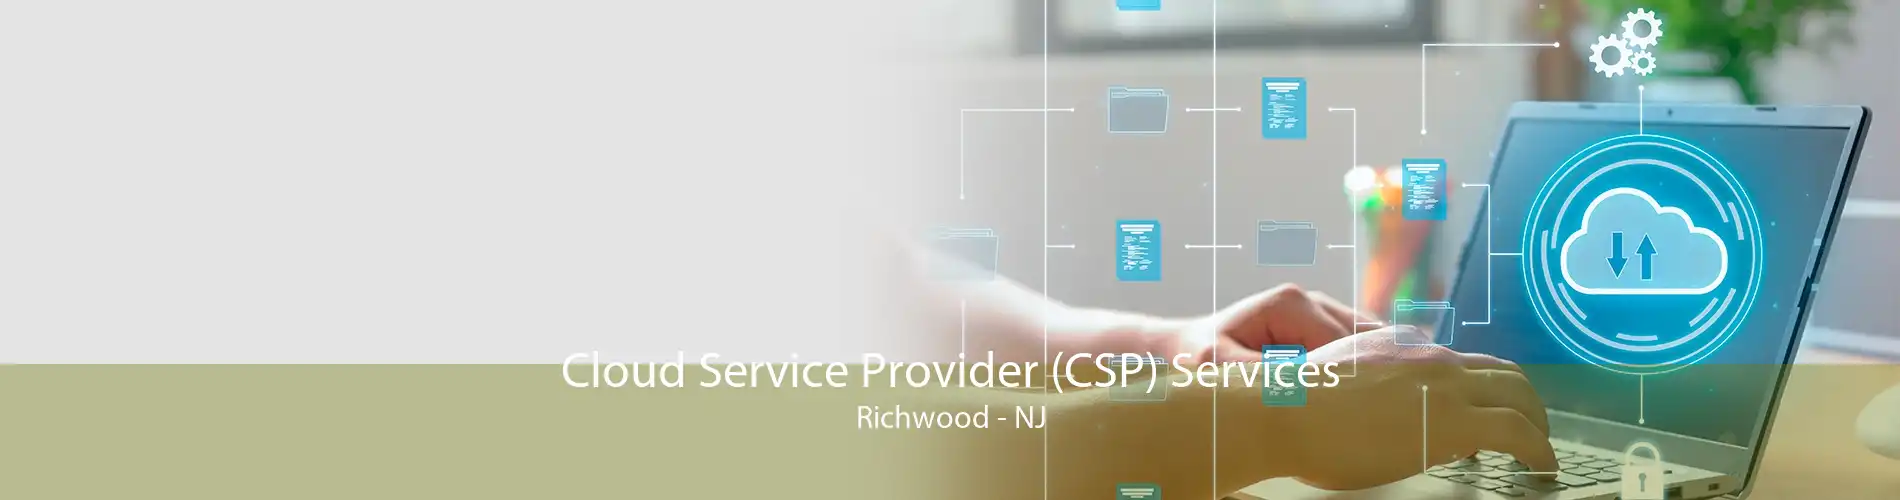 Cloud Service Provider (CSP) Services Richwood - NJ